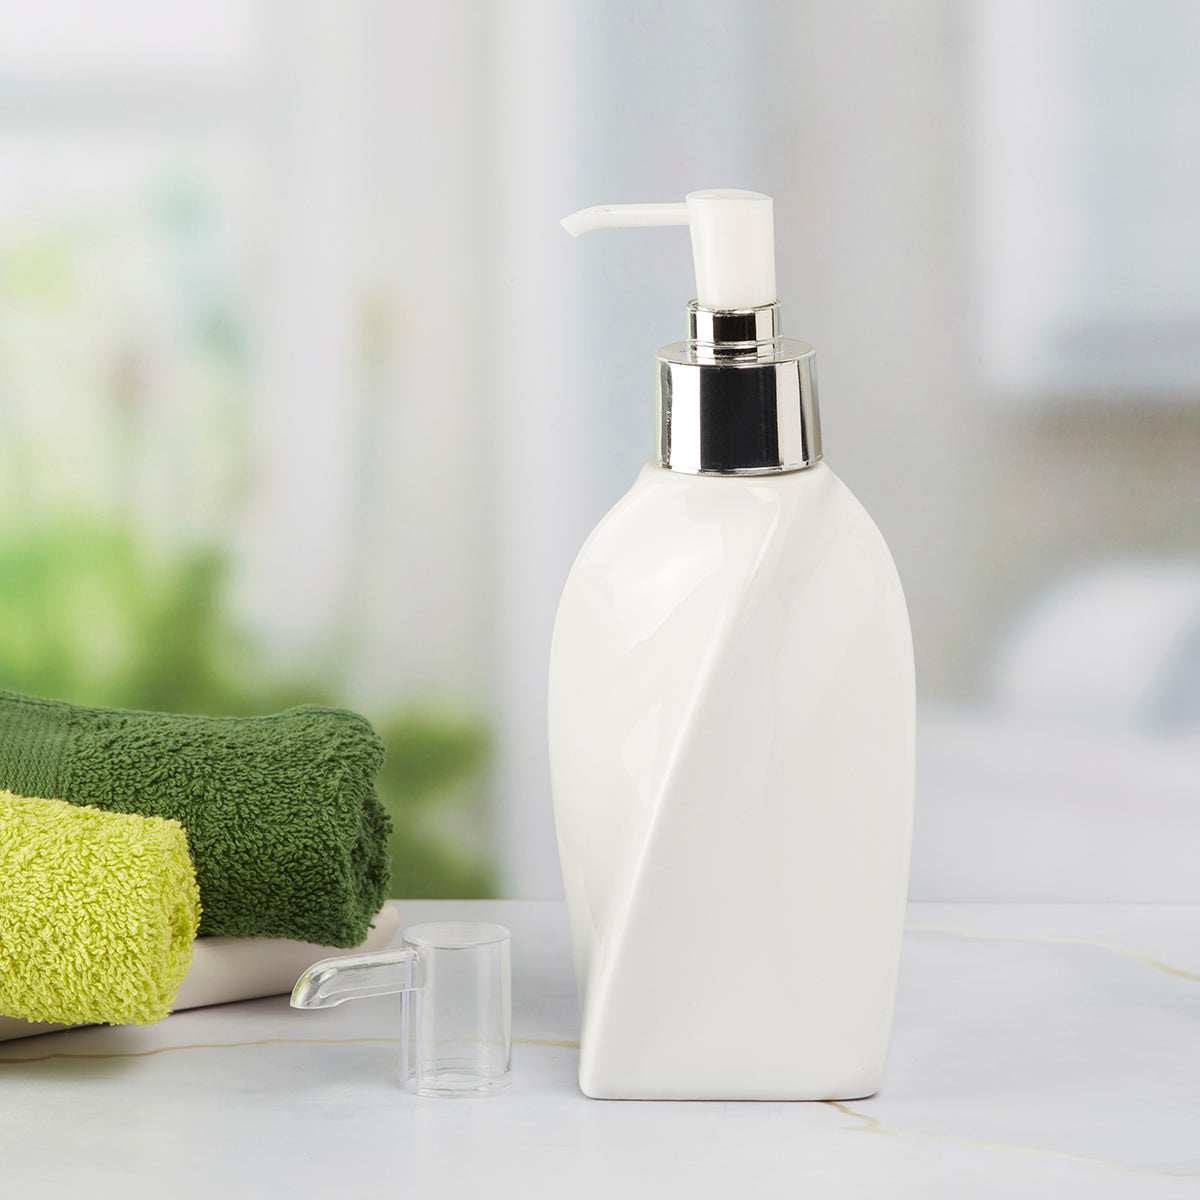 Ceramic Soap Dispenser handwash Pump for Bathroom, Set of 1, White (9659)